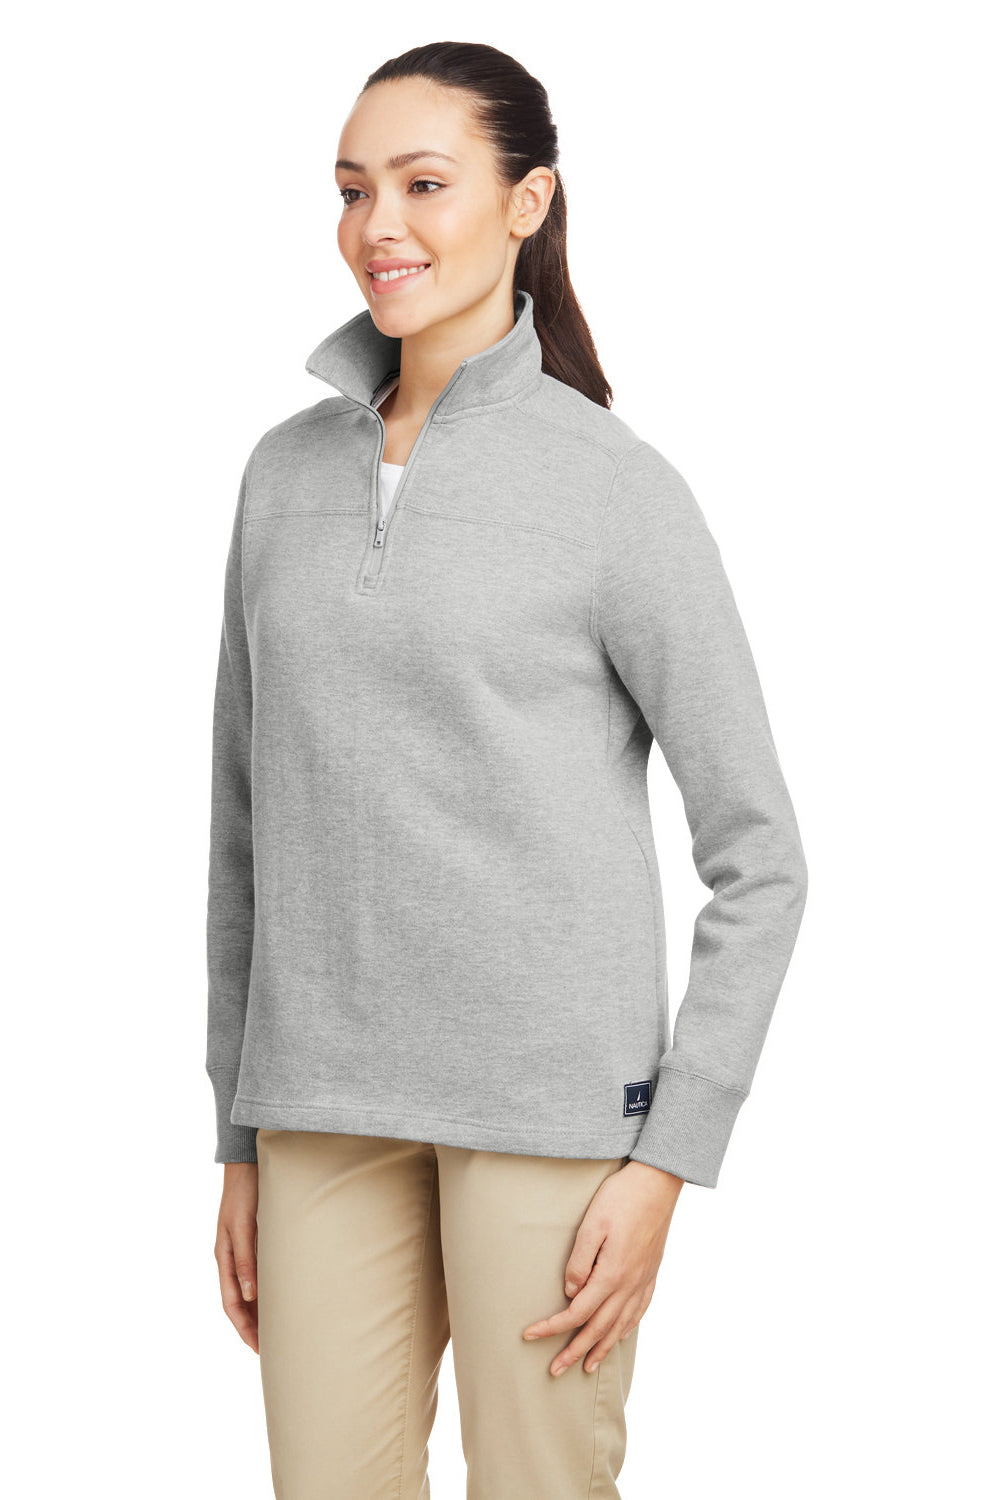 Nautica N17397 Womens Anchor Fleece 1/4 Zip Sweatshirt Oxford Grey 3Q